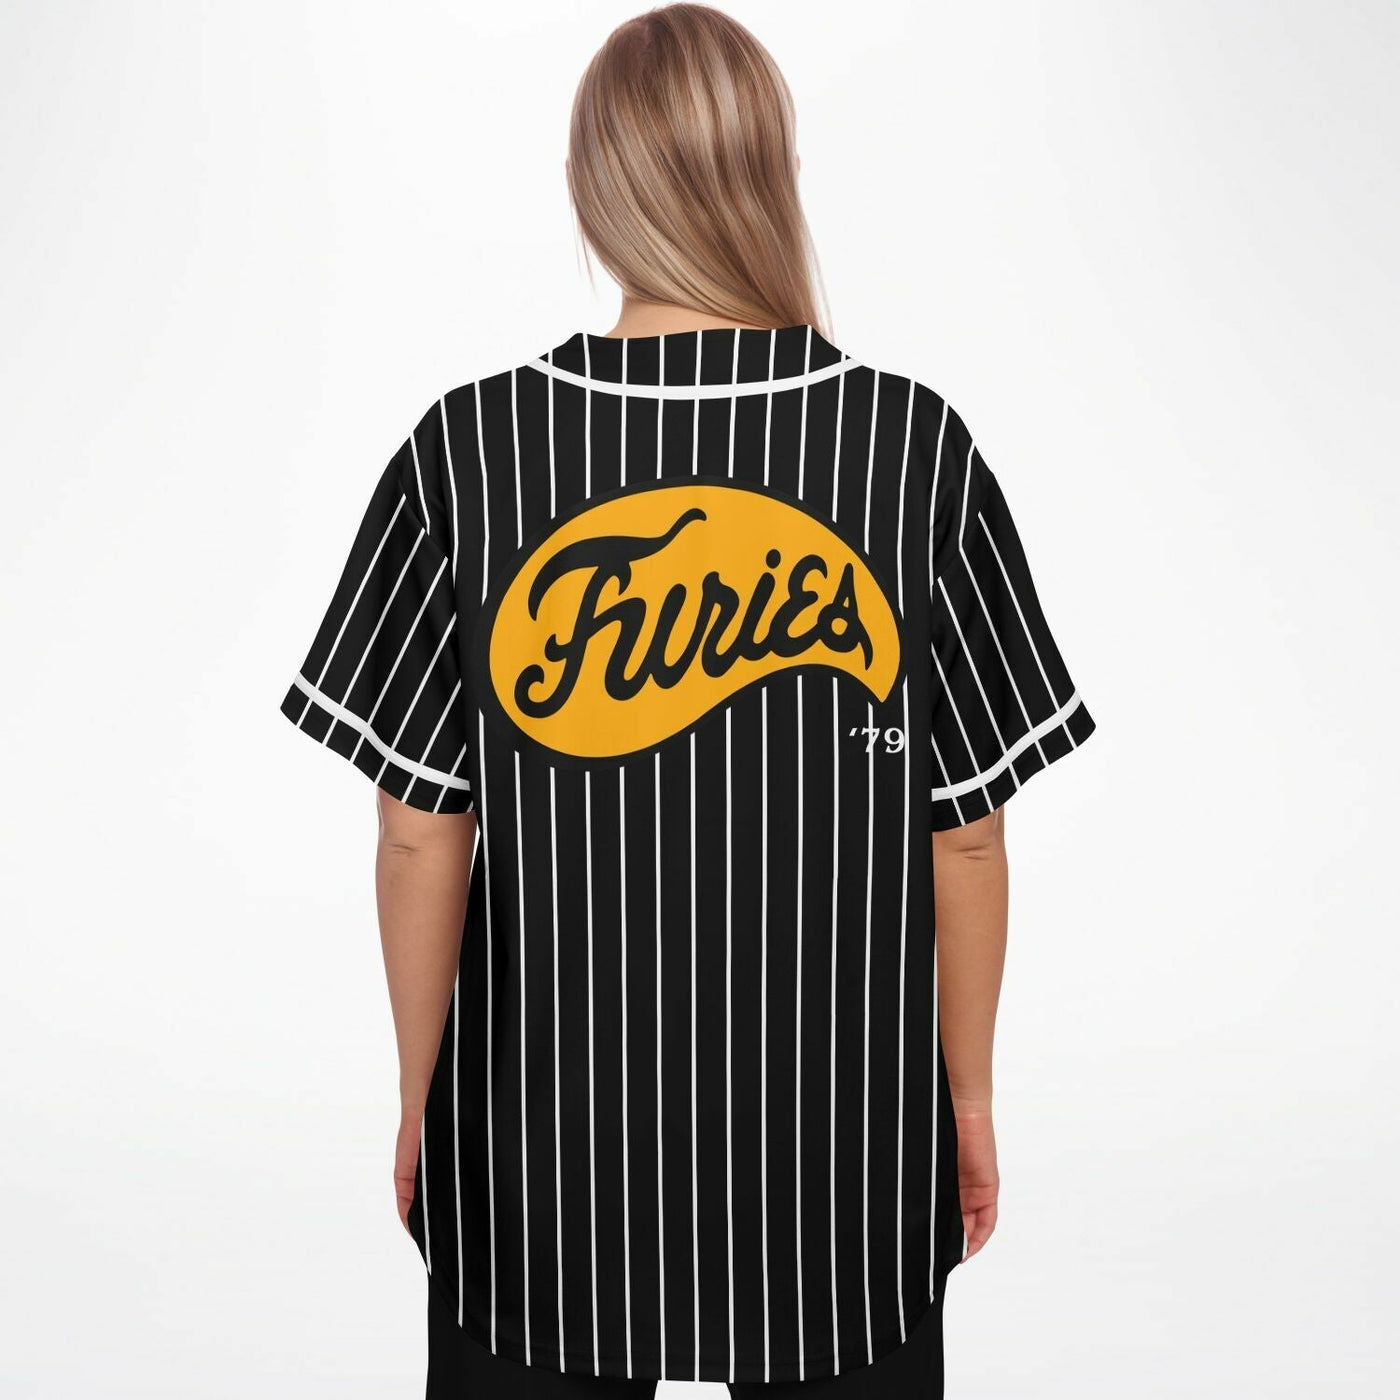 The Furies Baseball Jersey - The Warriors Riverside Gang (Black Striped Pattern)